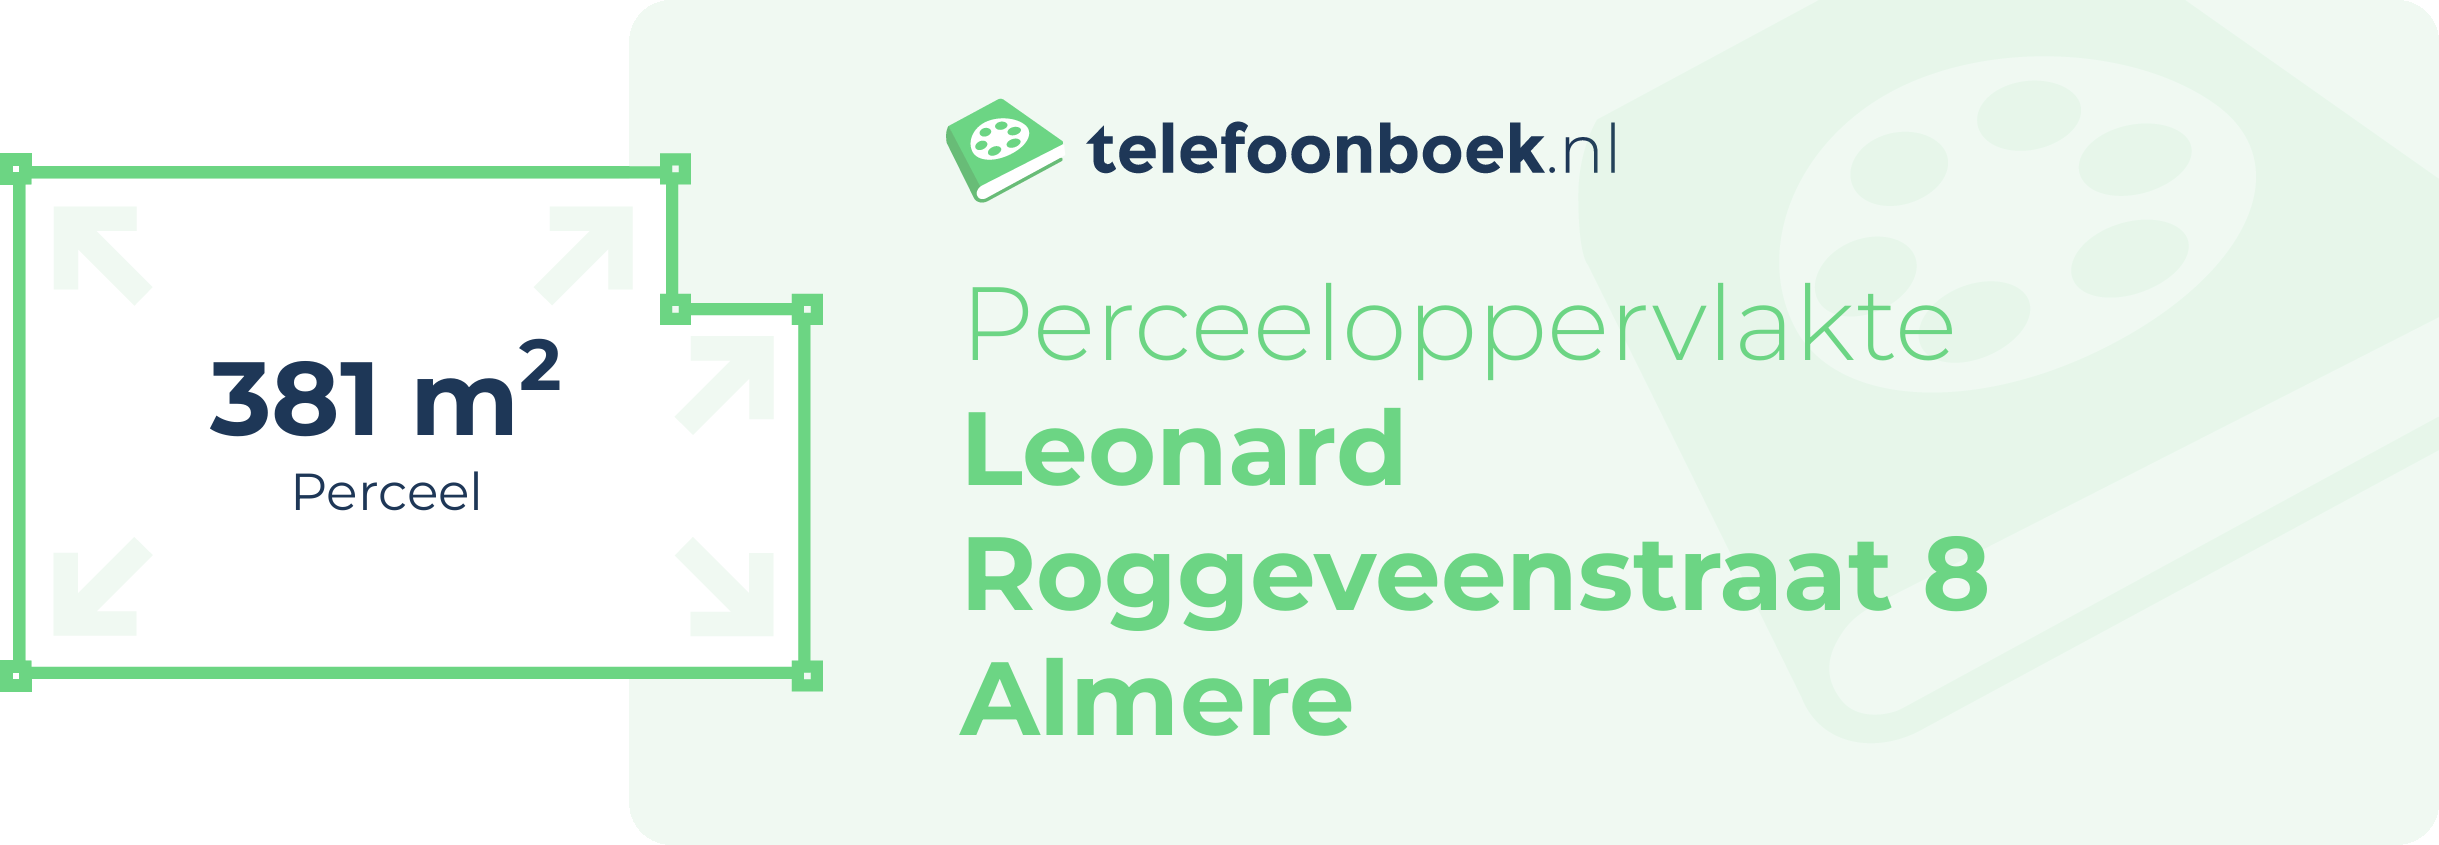 Perceeloppervlakte Leonard Roggeveenstraat 8 Almere